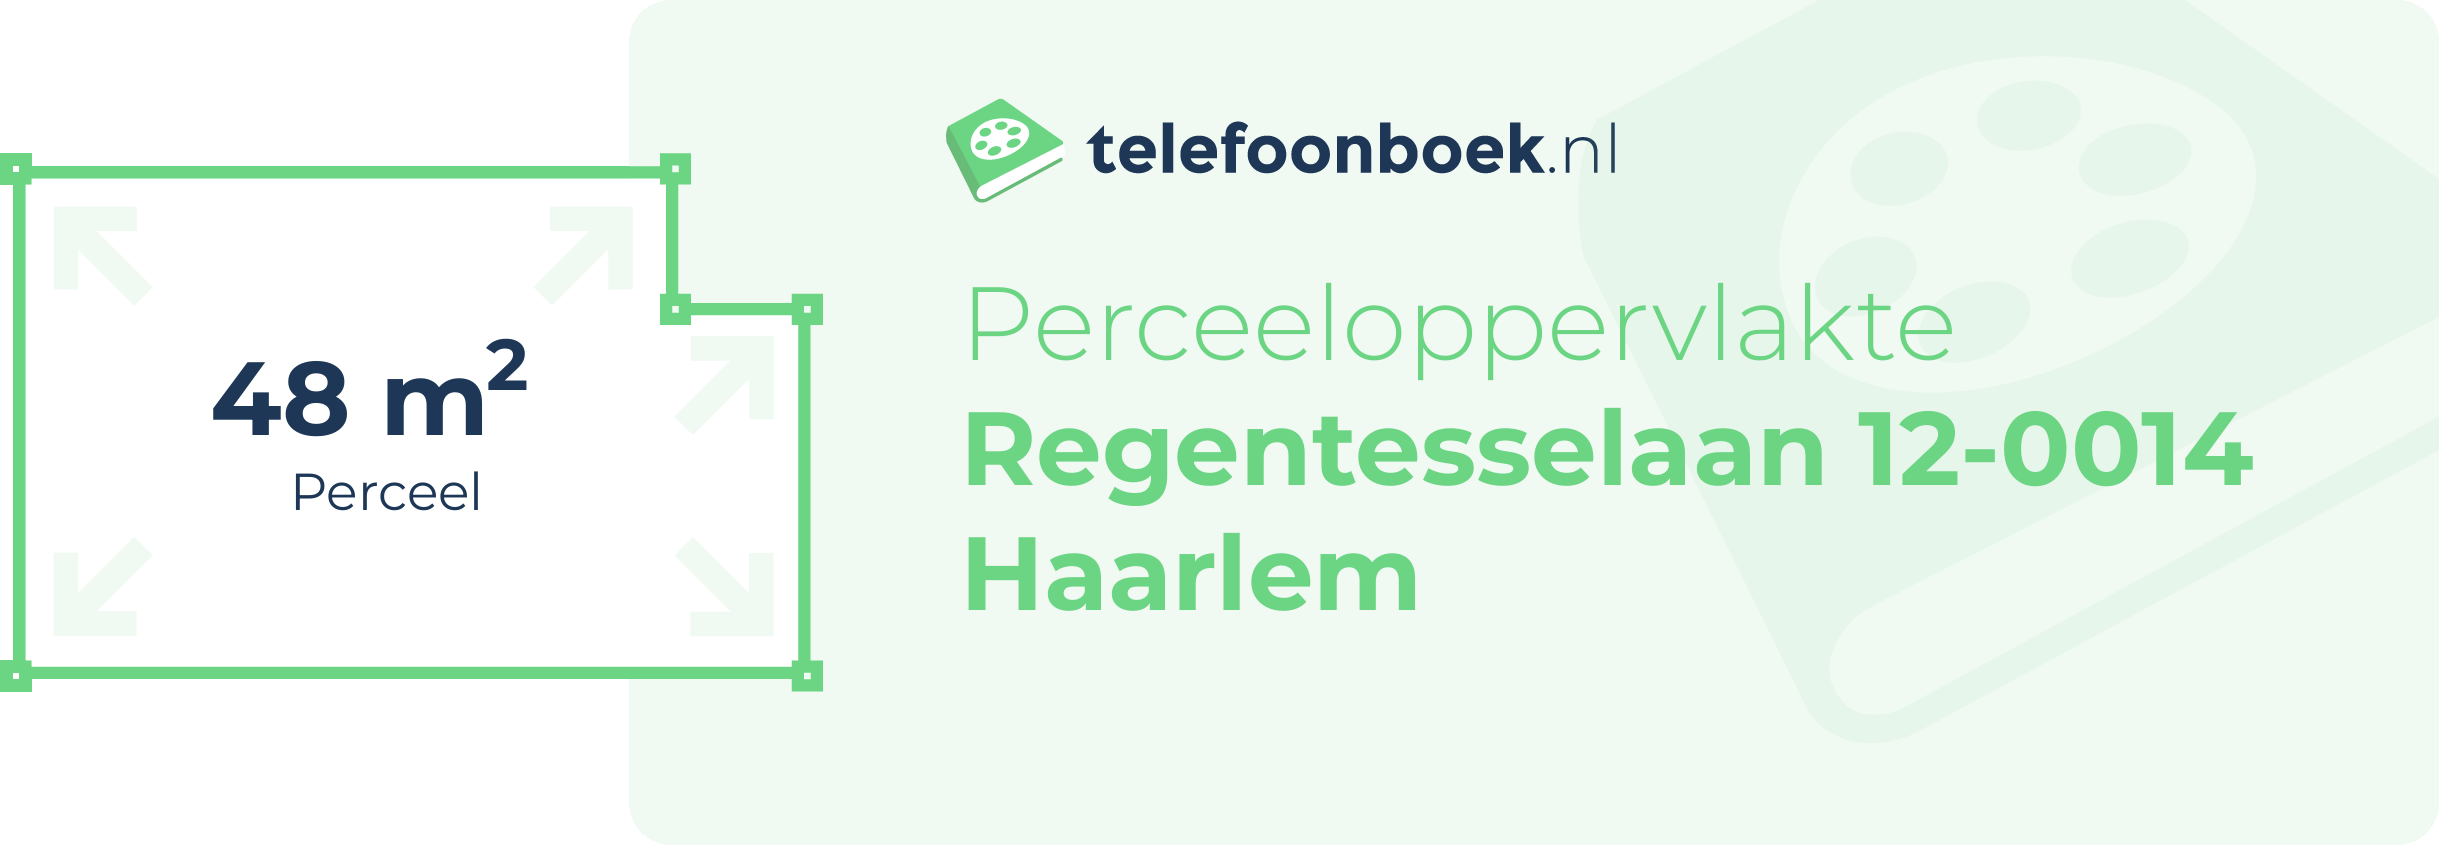 Perceeloppervlakte Regentesselaan 12-0014 Haarlem